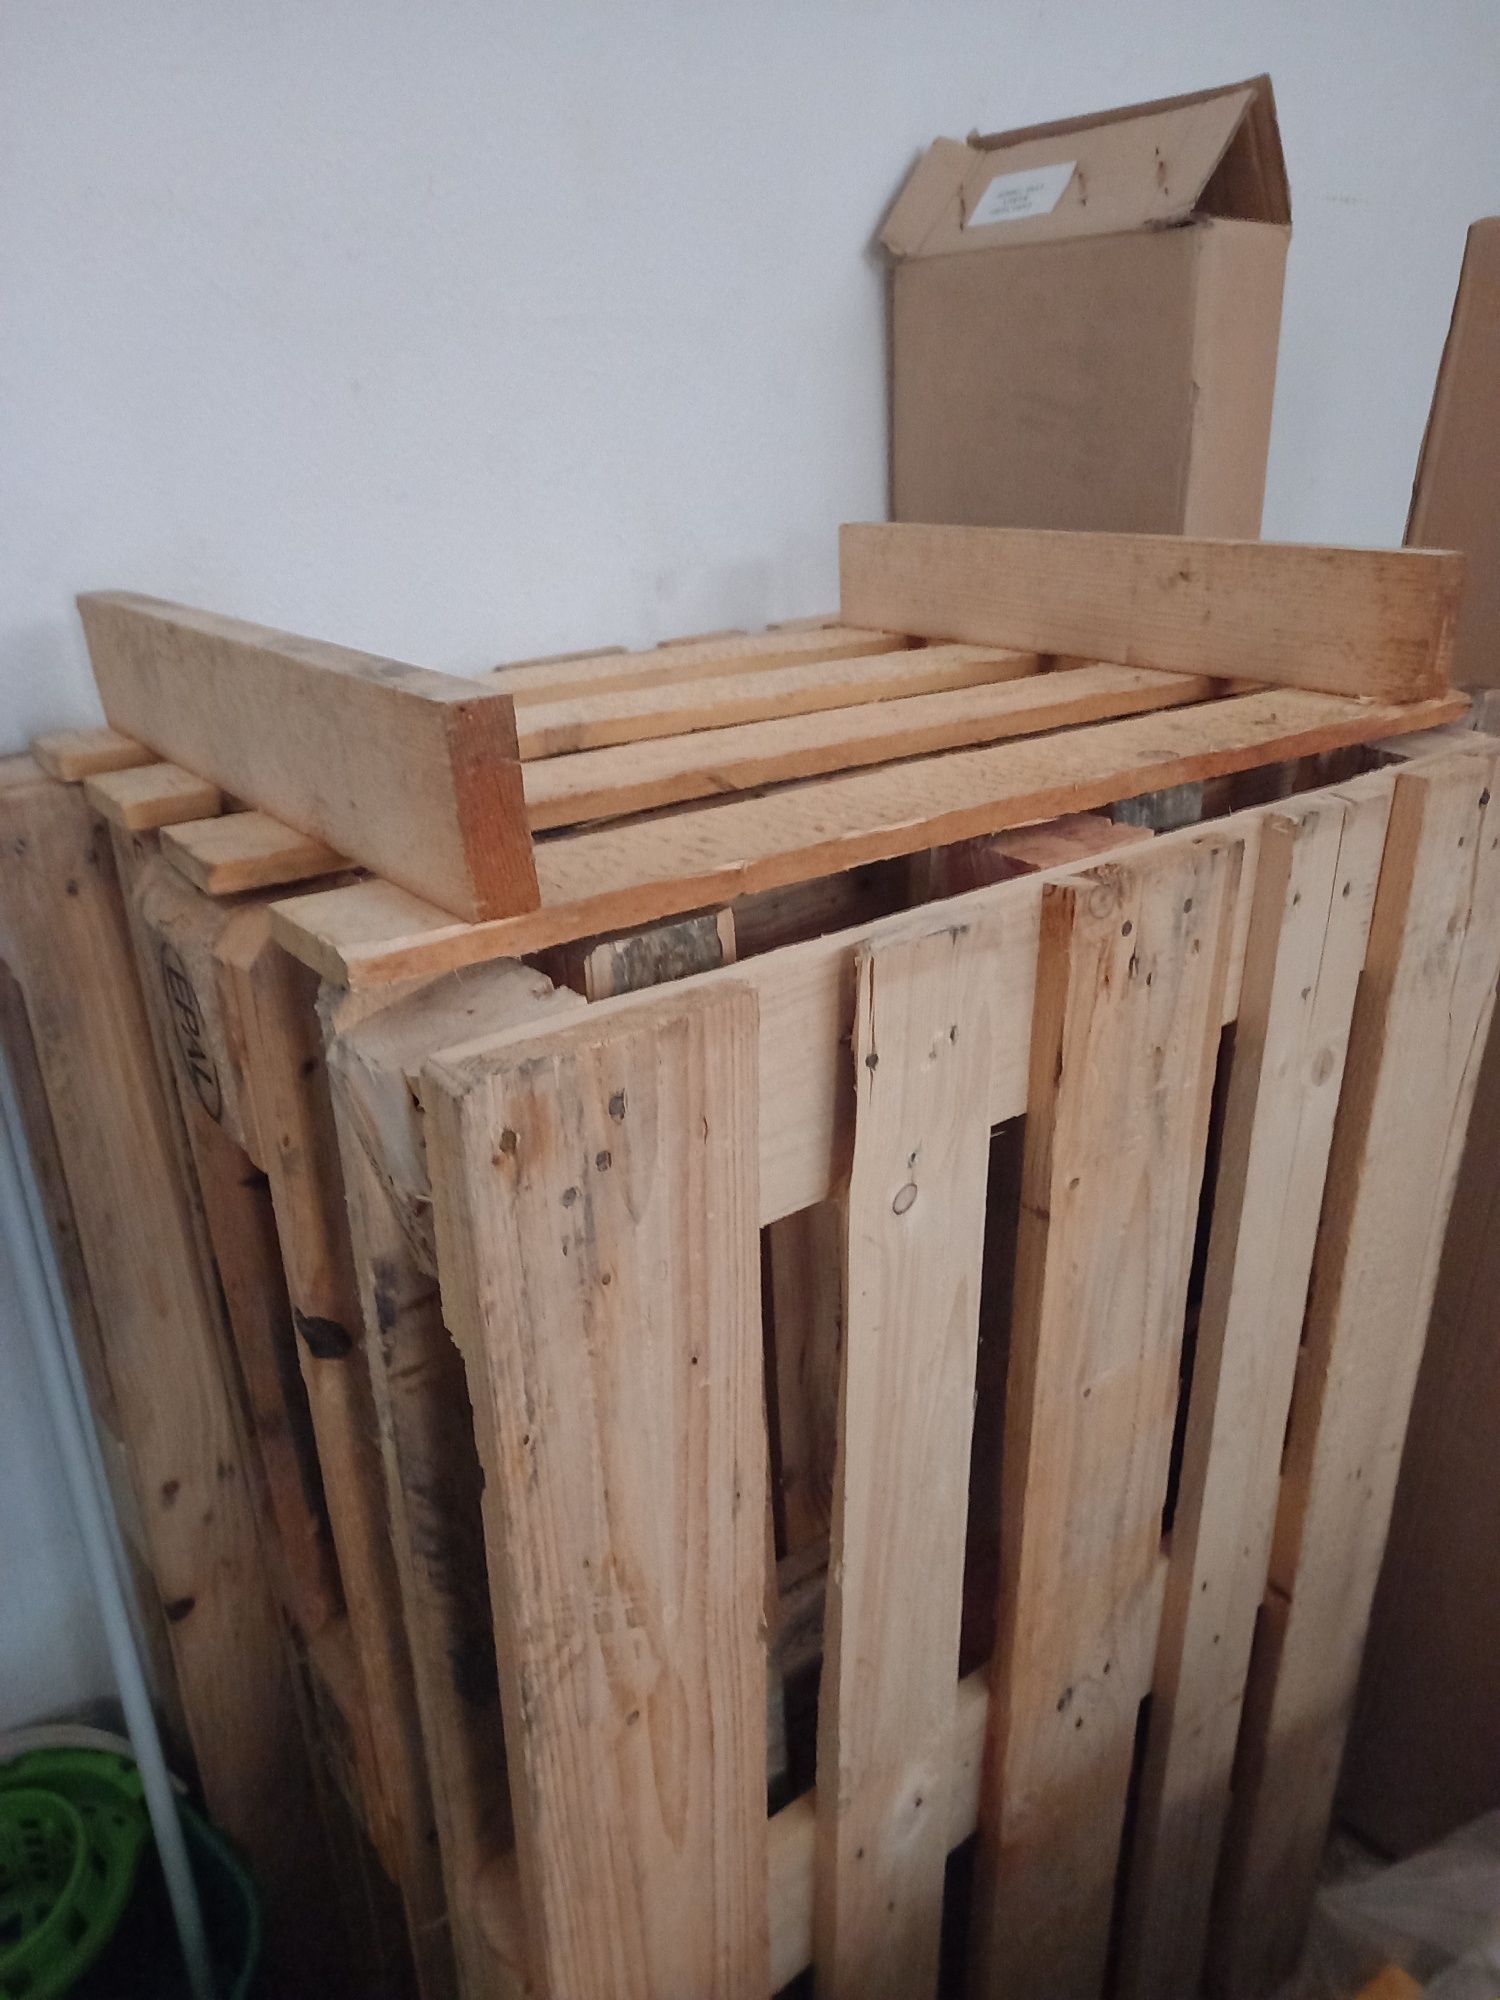 Paletes (1.20 x 0.80cm) madeira